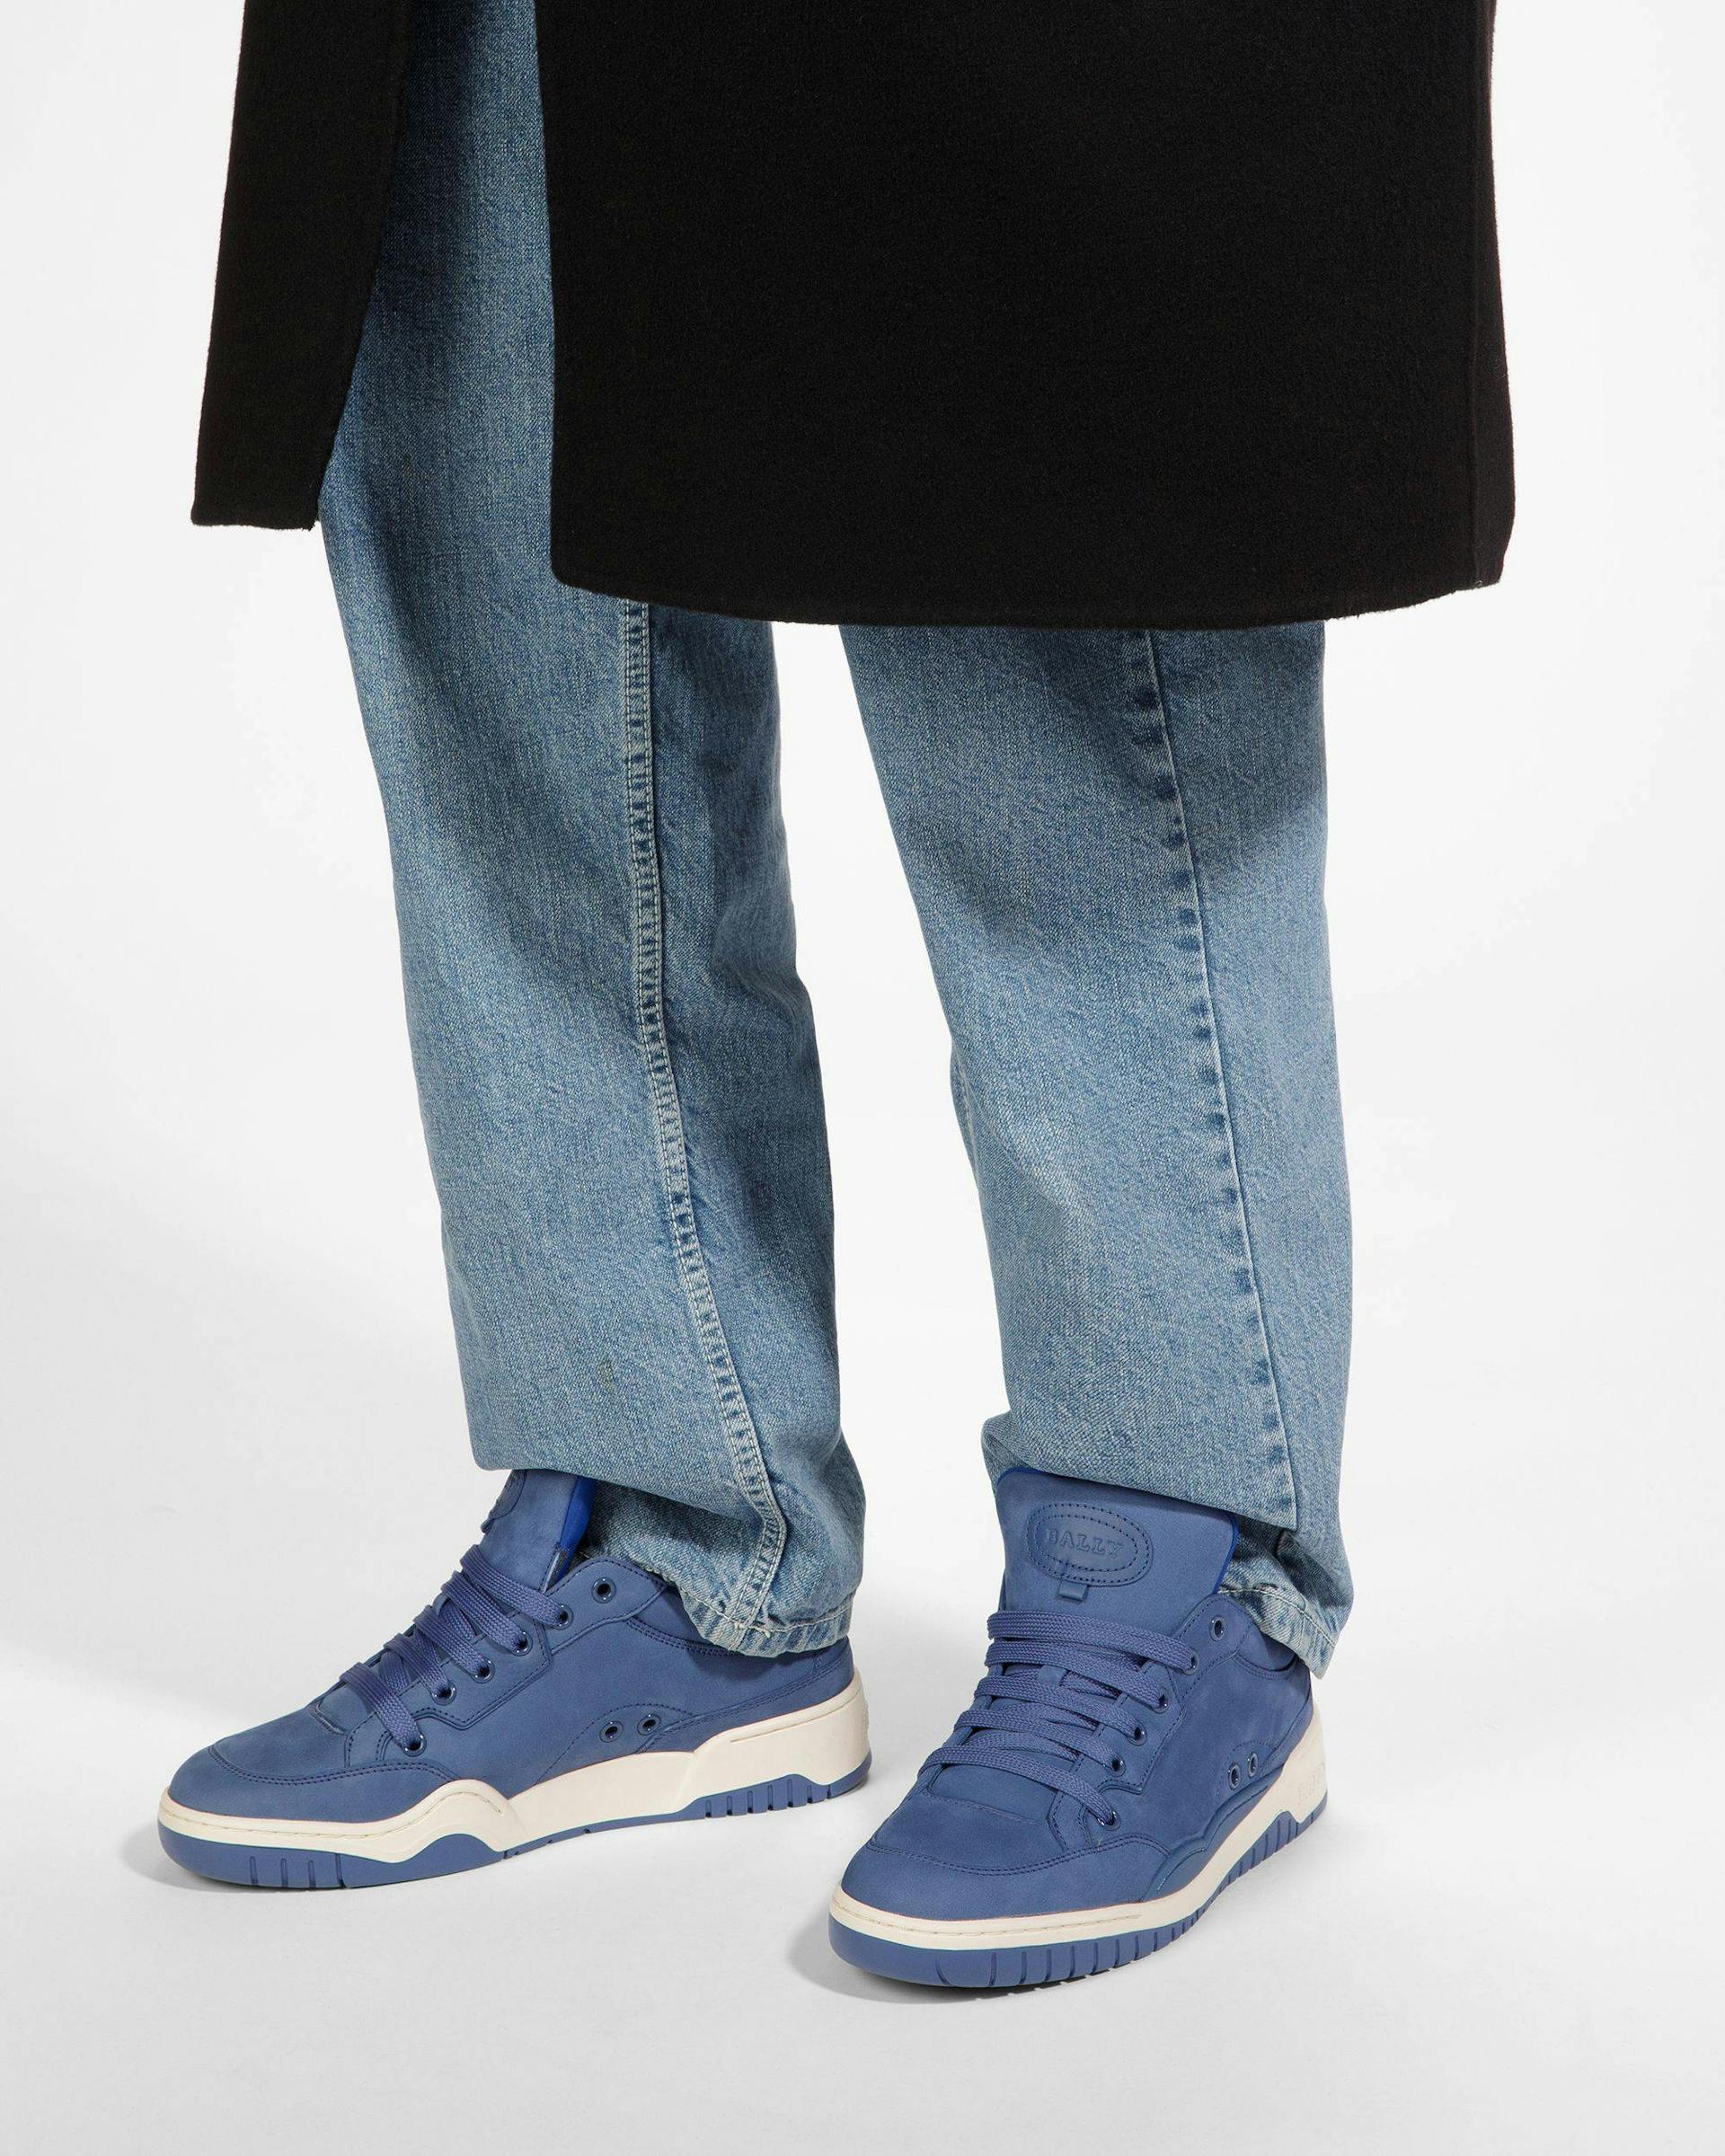 Kiro Leather Sneakers In Blue Neon - Men's - Bally - 07